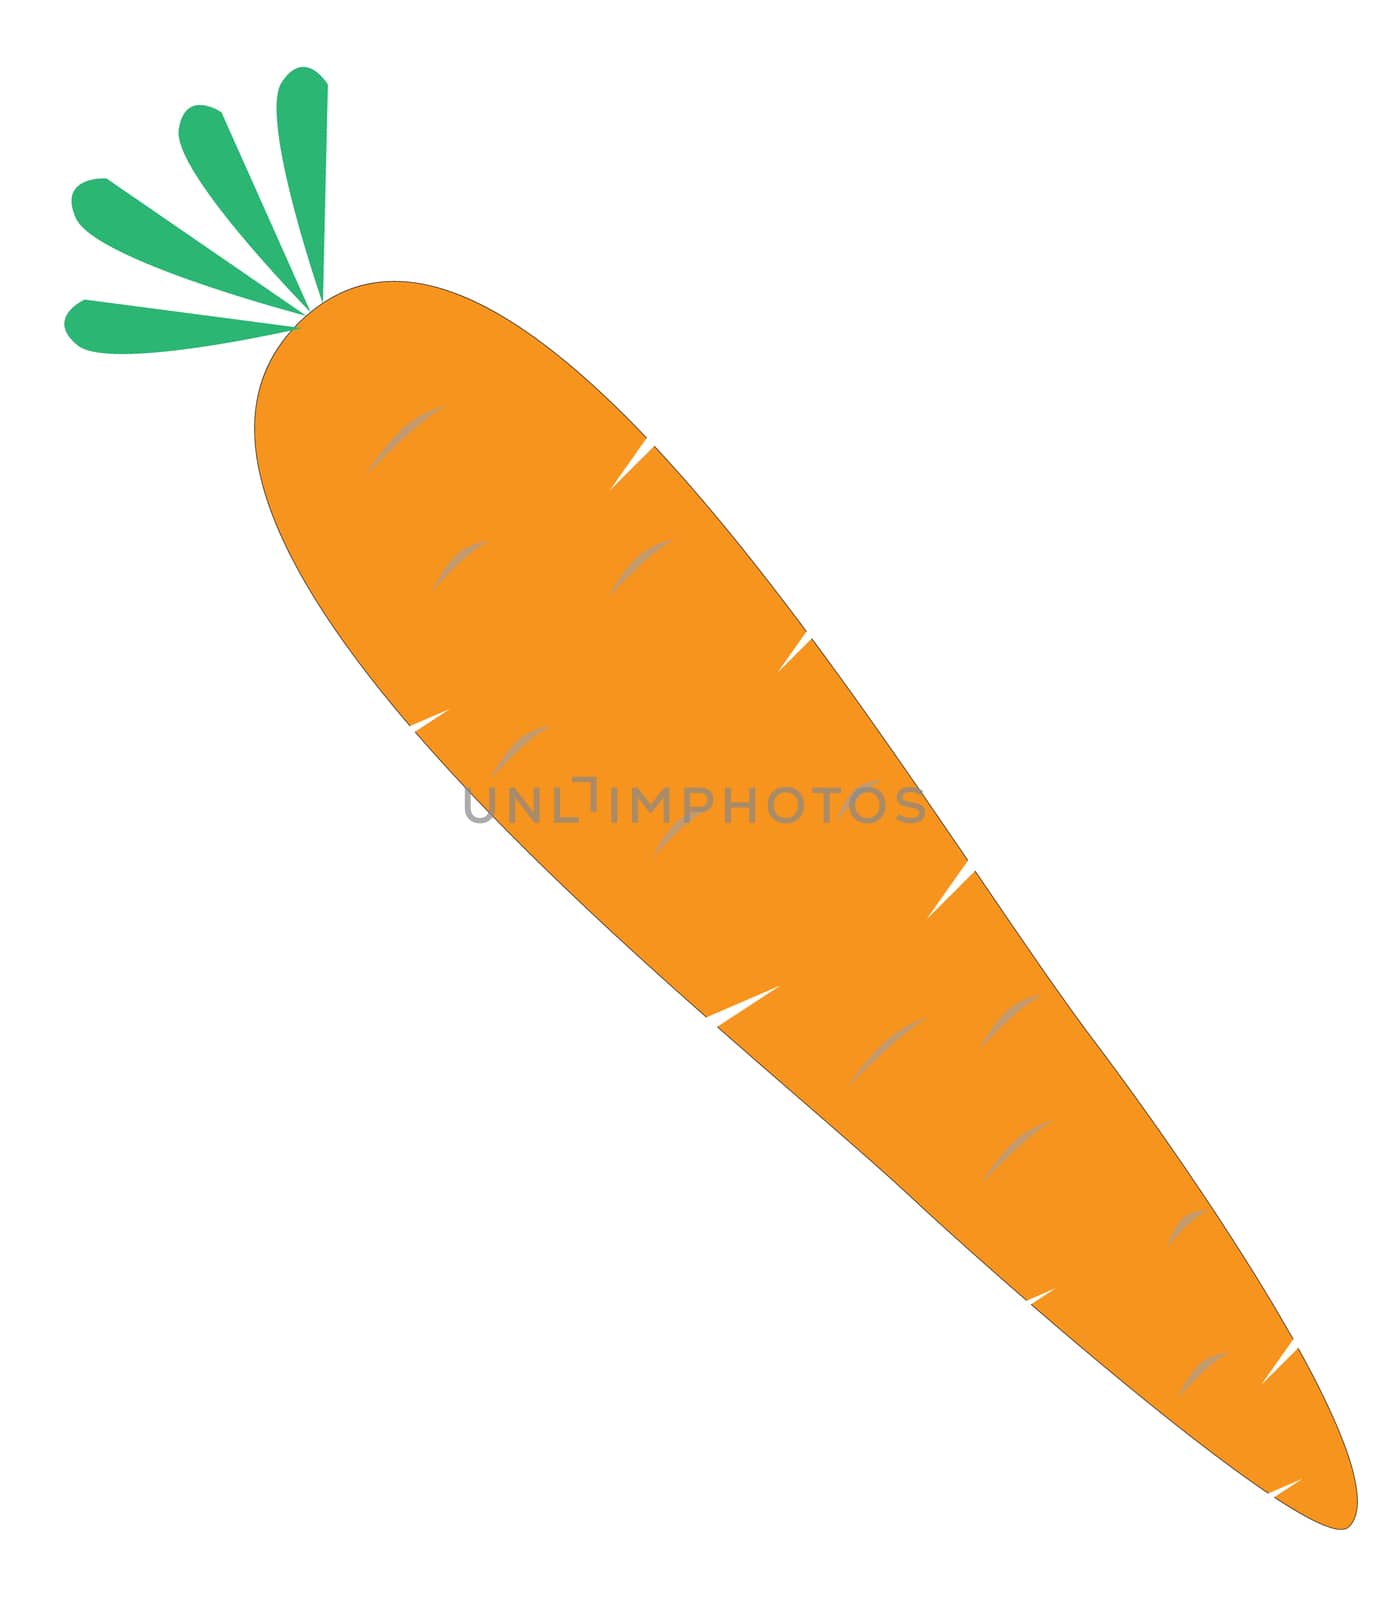 carrot icon on white background. 